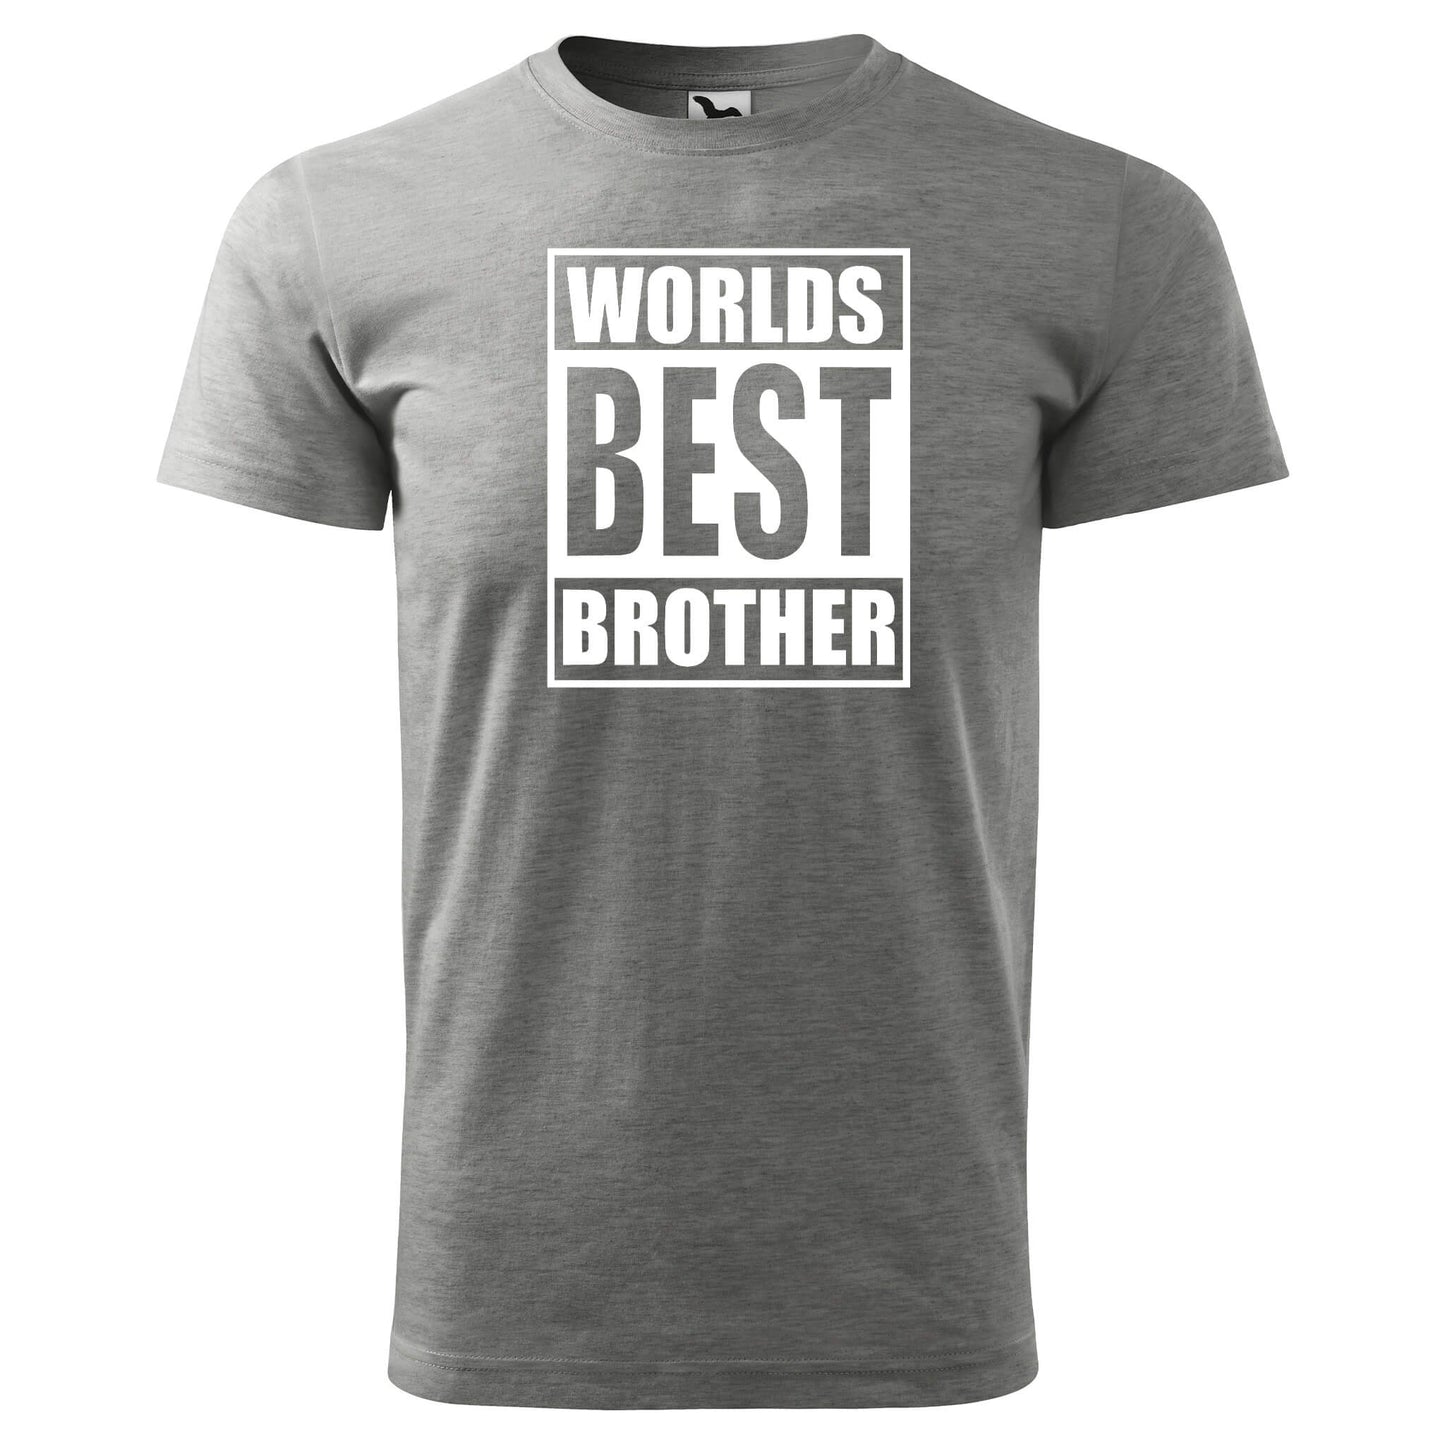 T-shirt - Worlds best brother - Customizable - rvdesignprint